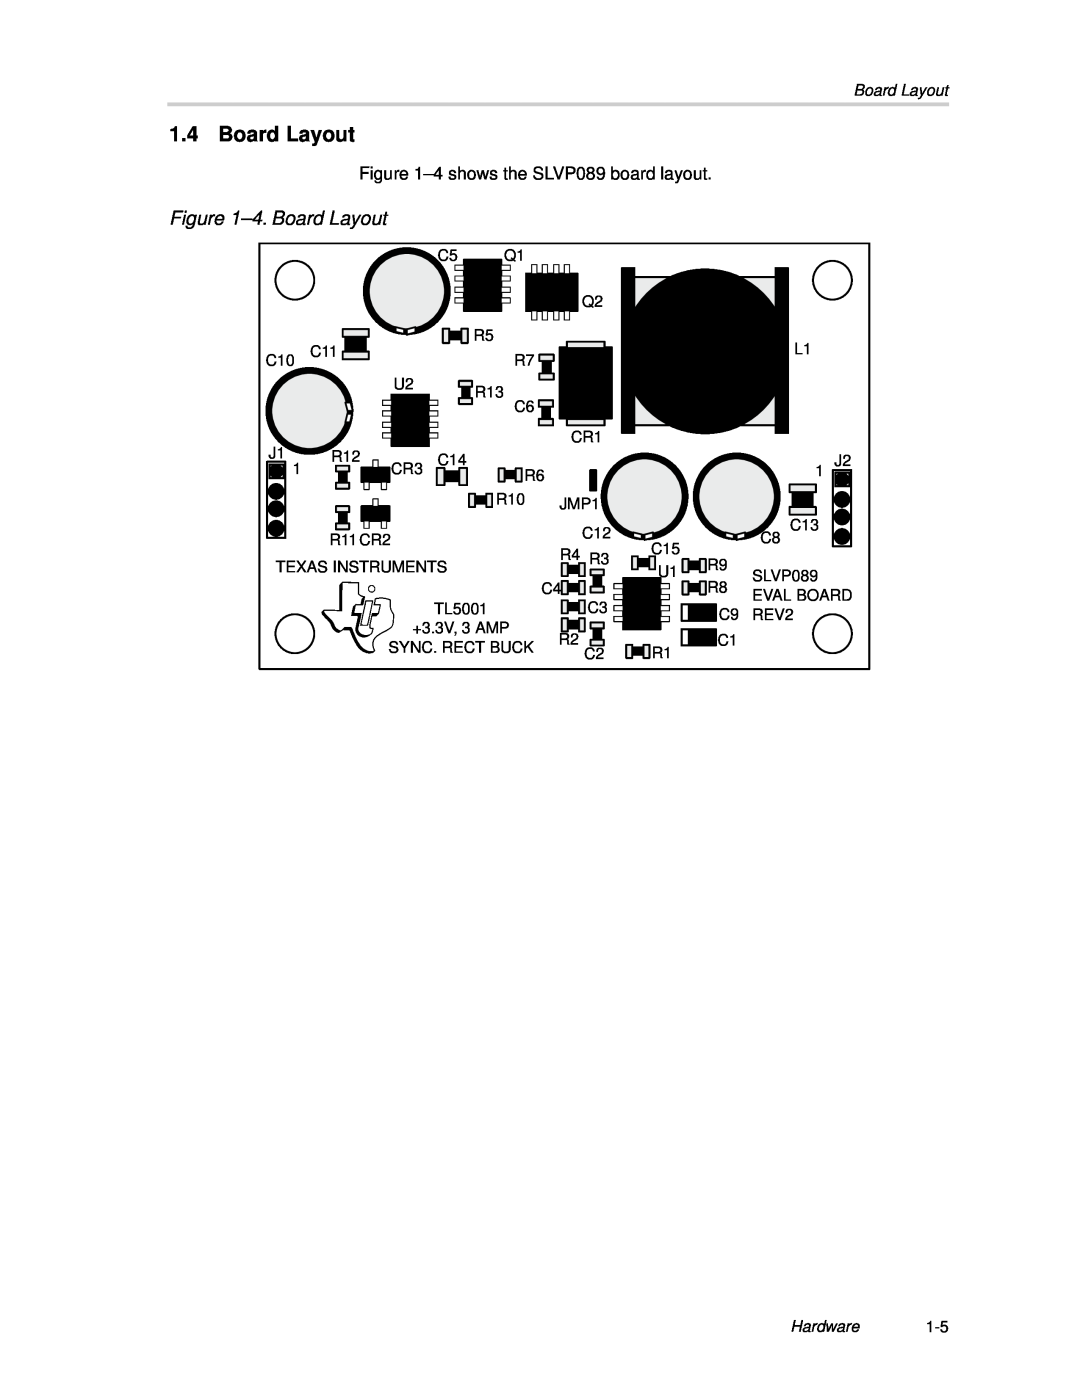 Texas Instruments SLVP089 manual 4. Board Layout, Hardware1-5 